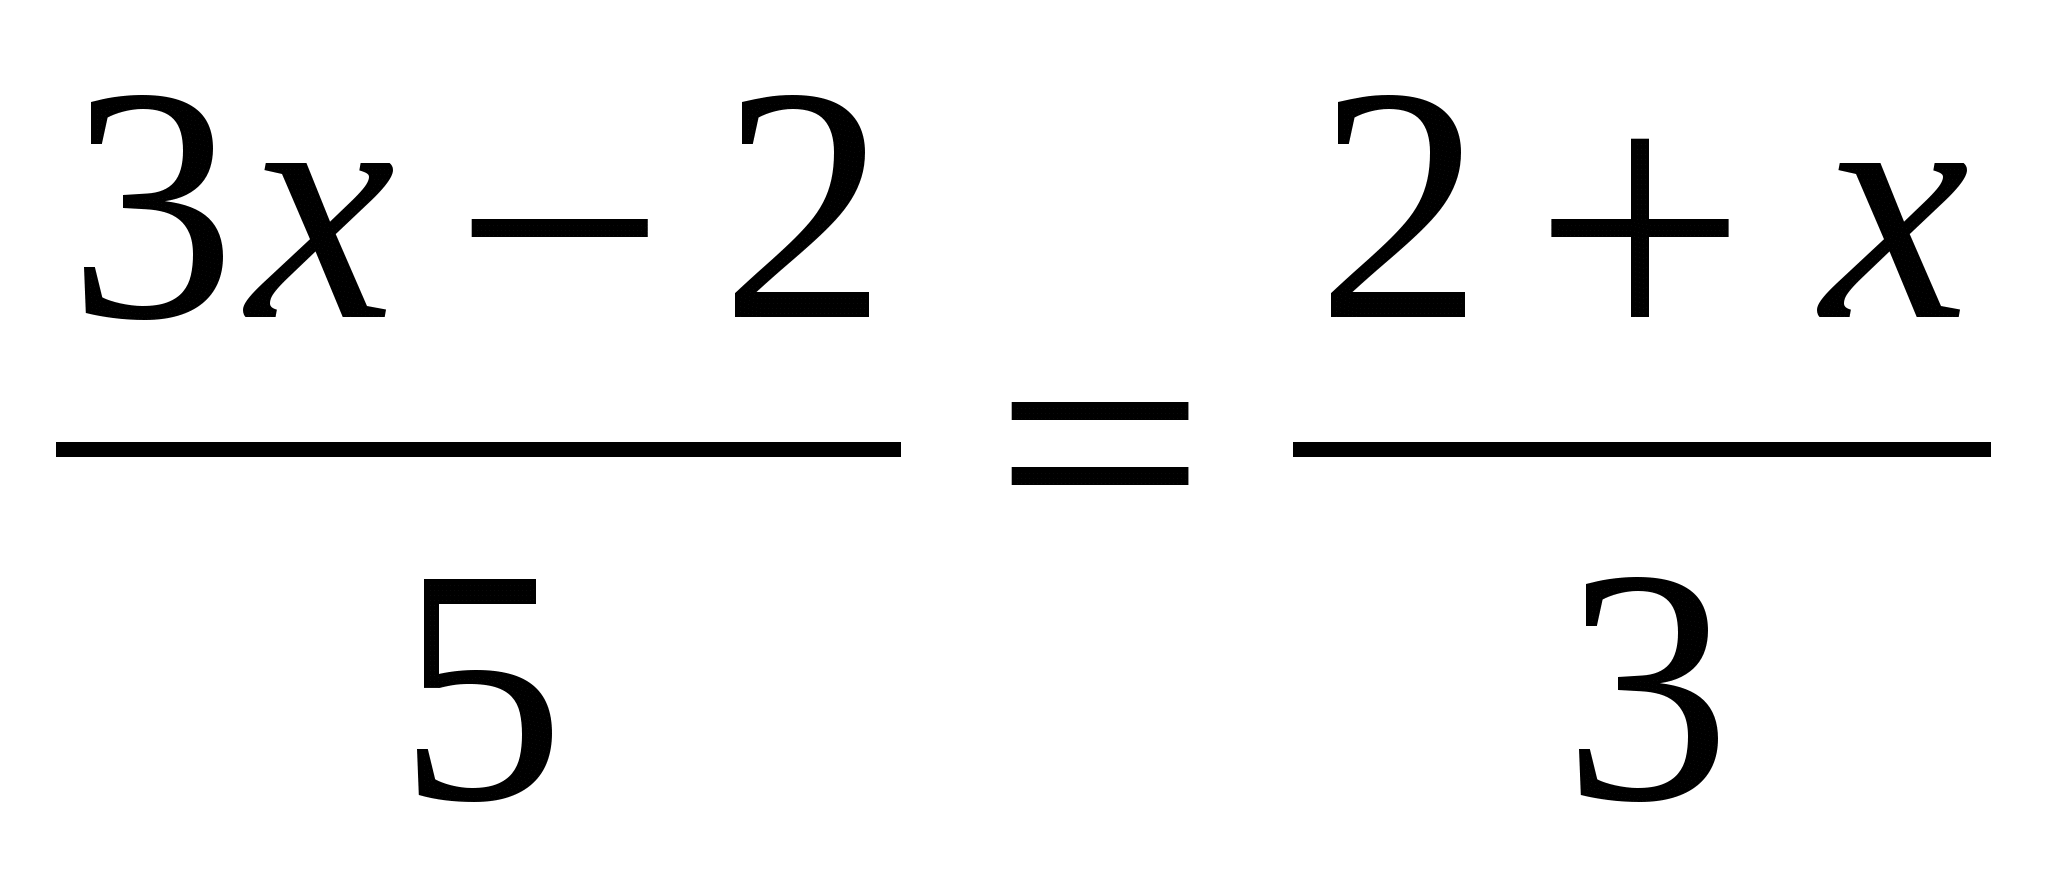 Уравнения дроби тренажер 5 класс. Уравнения с дробями. Уравнение 6 класс по математике с дробями. Дробные уравнения 6 класс. Уравнения с дробями 7 класс.